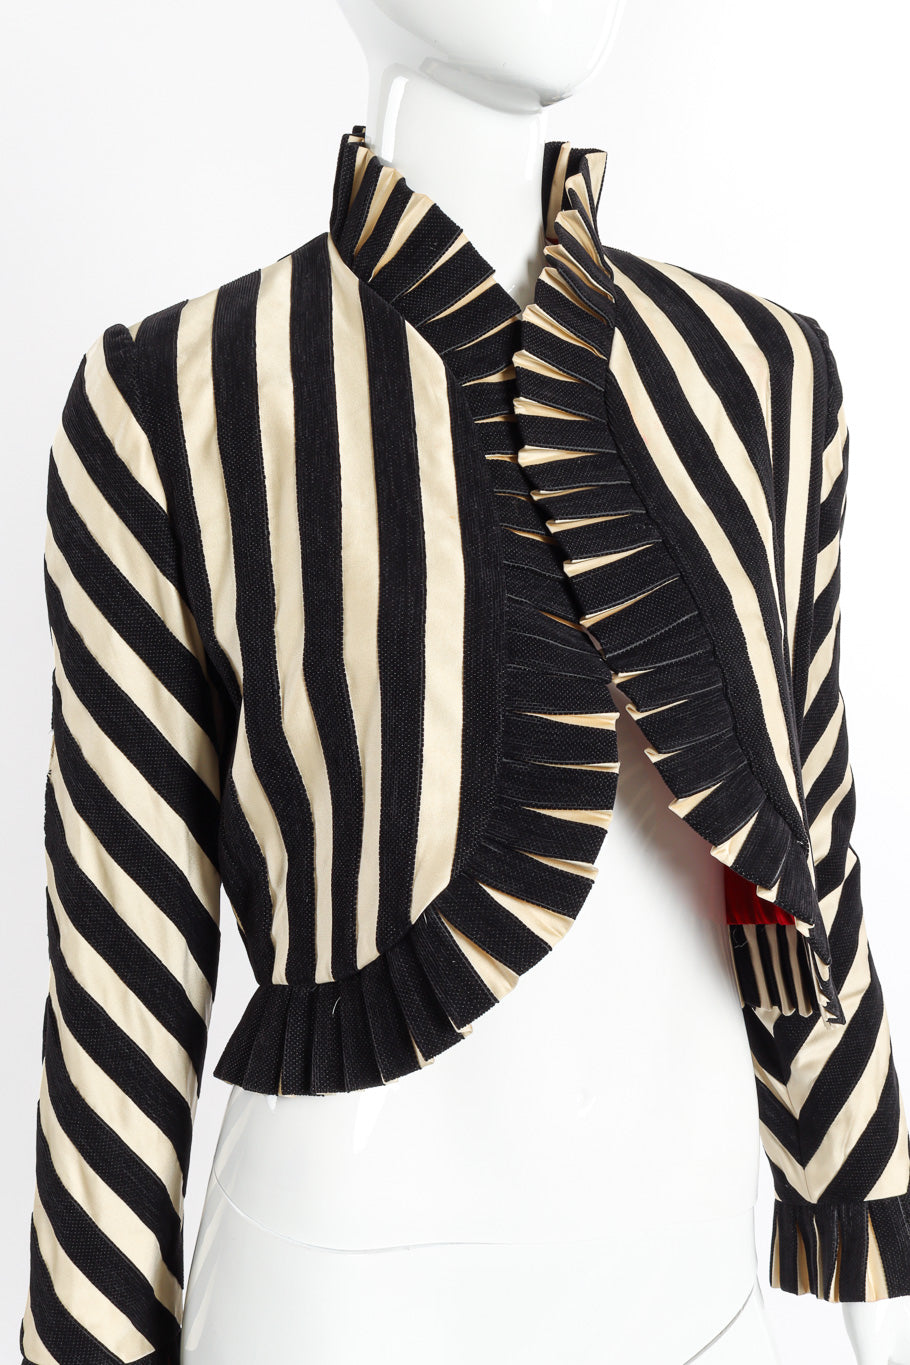 Vintage Bill Blass Striped Bolero Jacket front on mannequin closeup @recessla